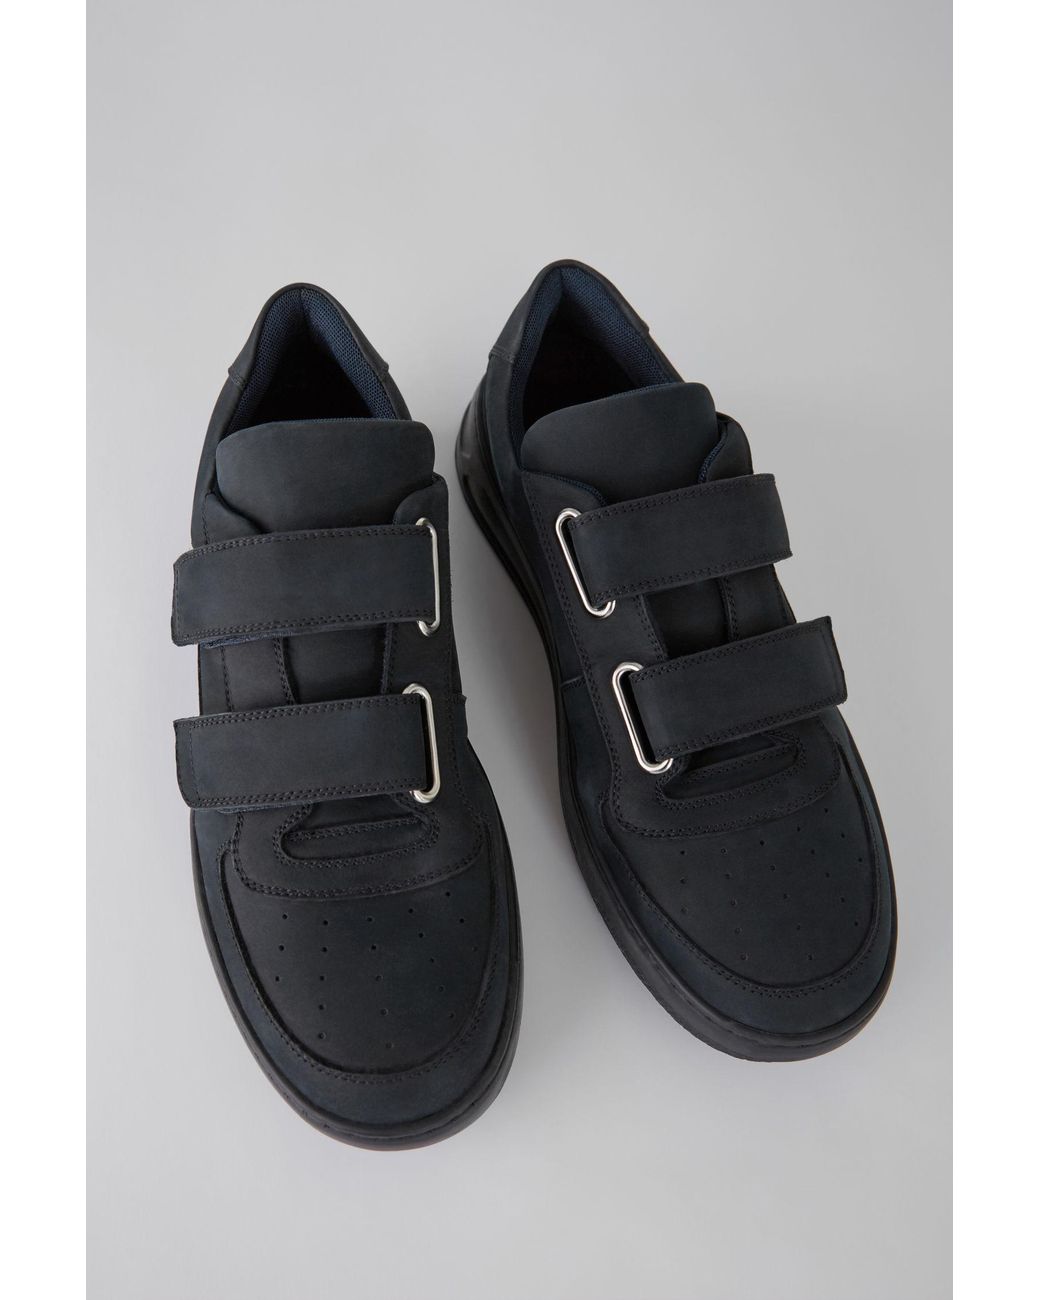 Acne Studios Velcro Sneakers black for Men | Lyst